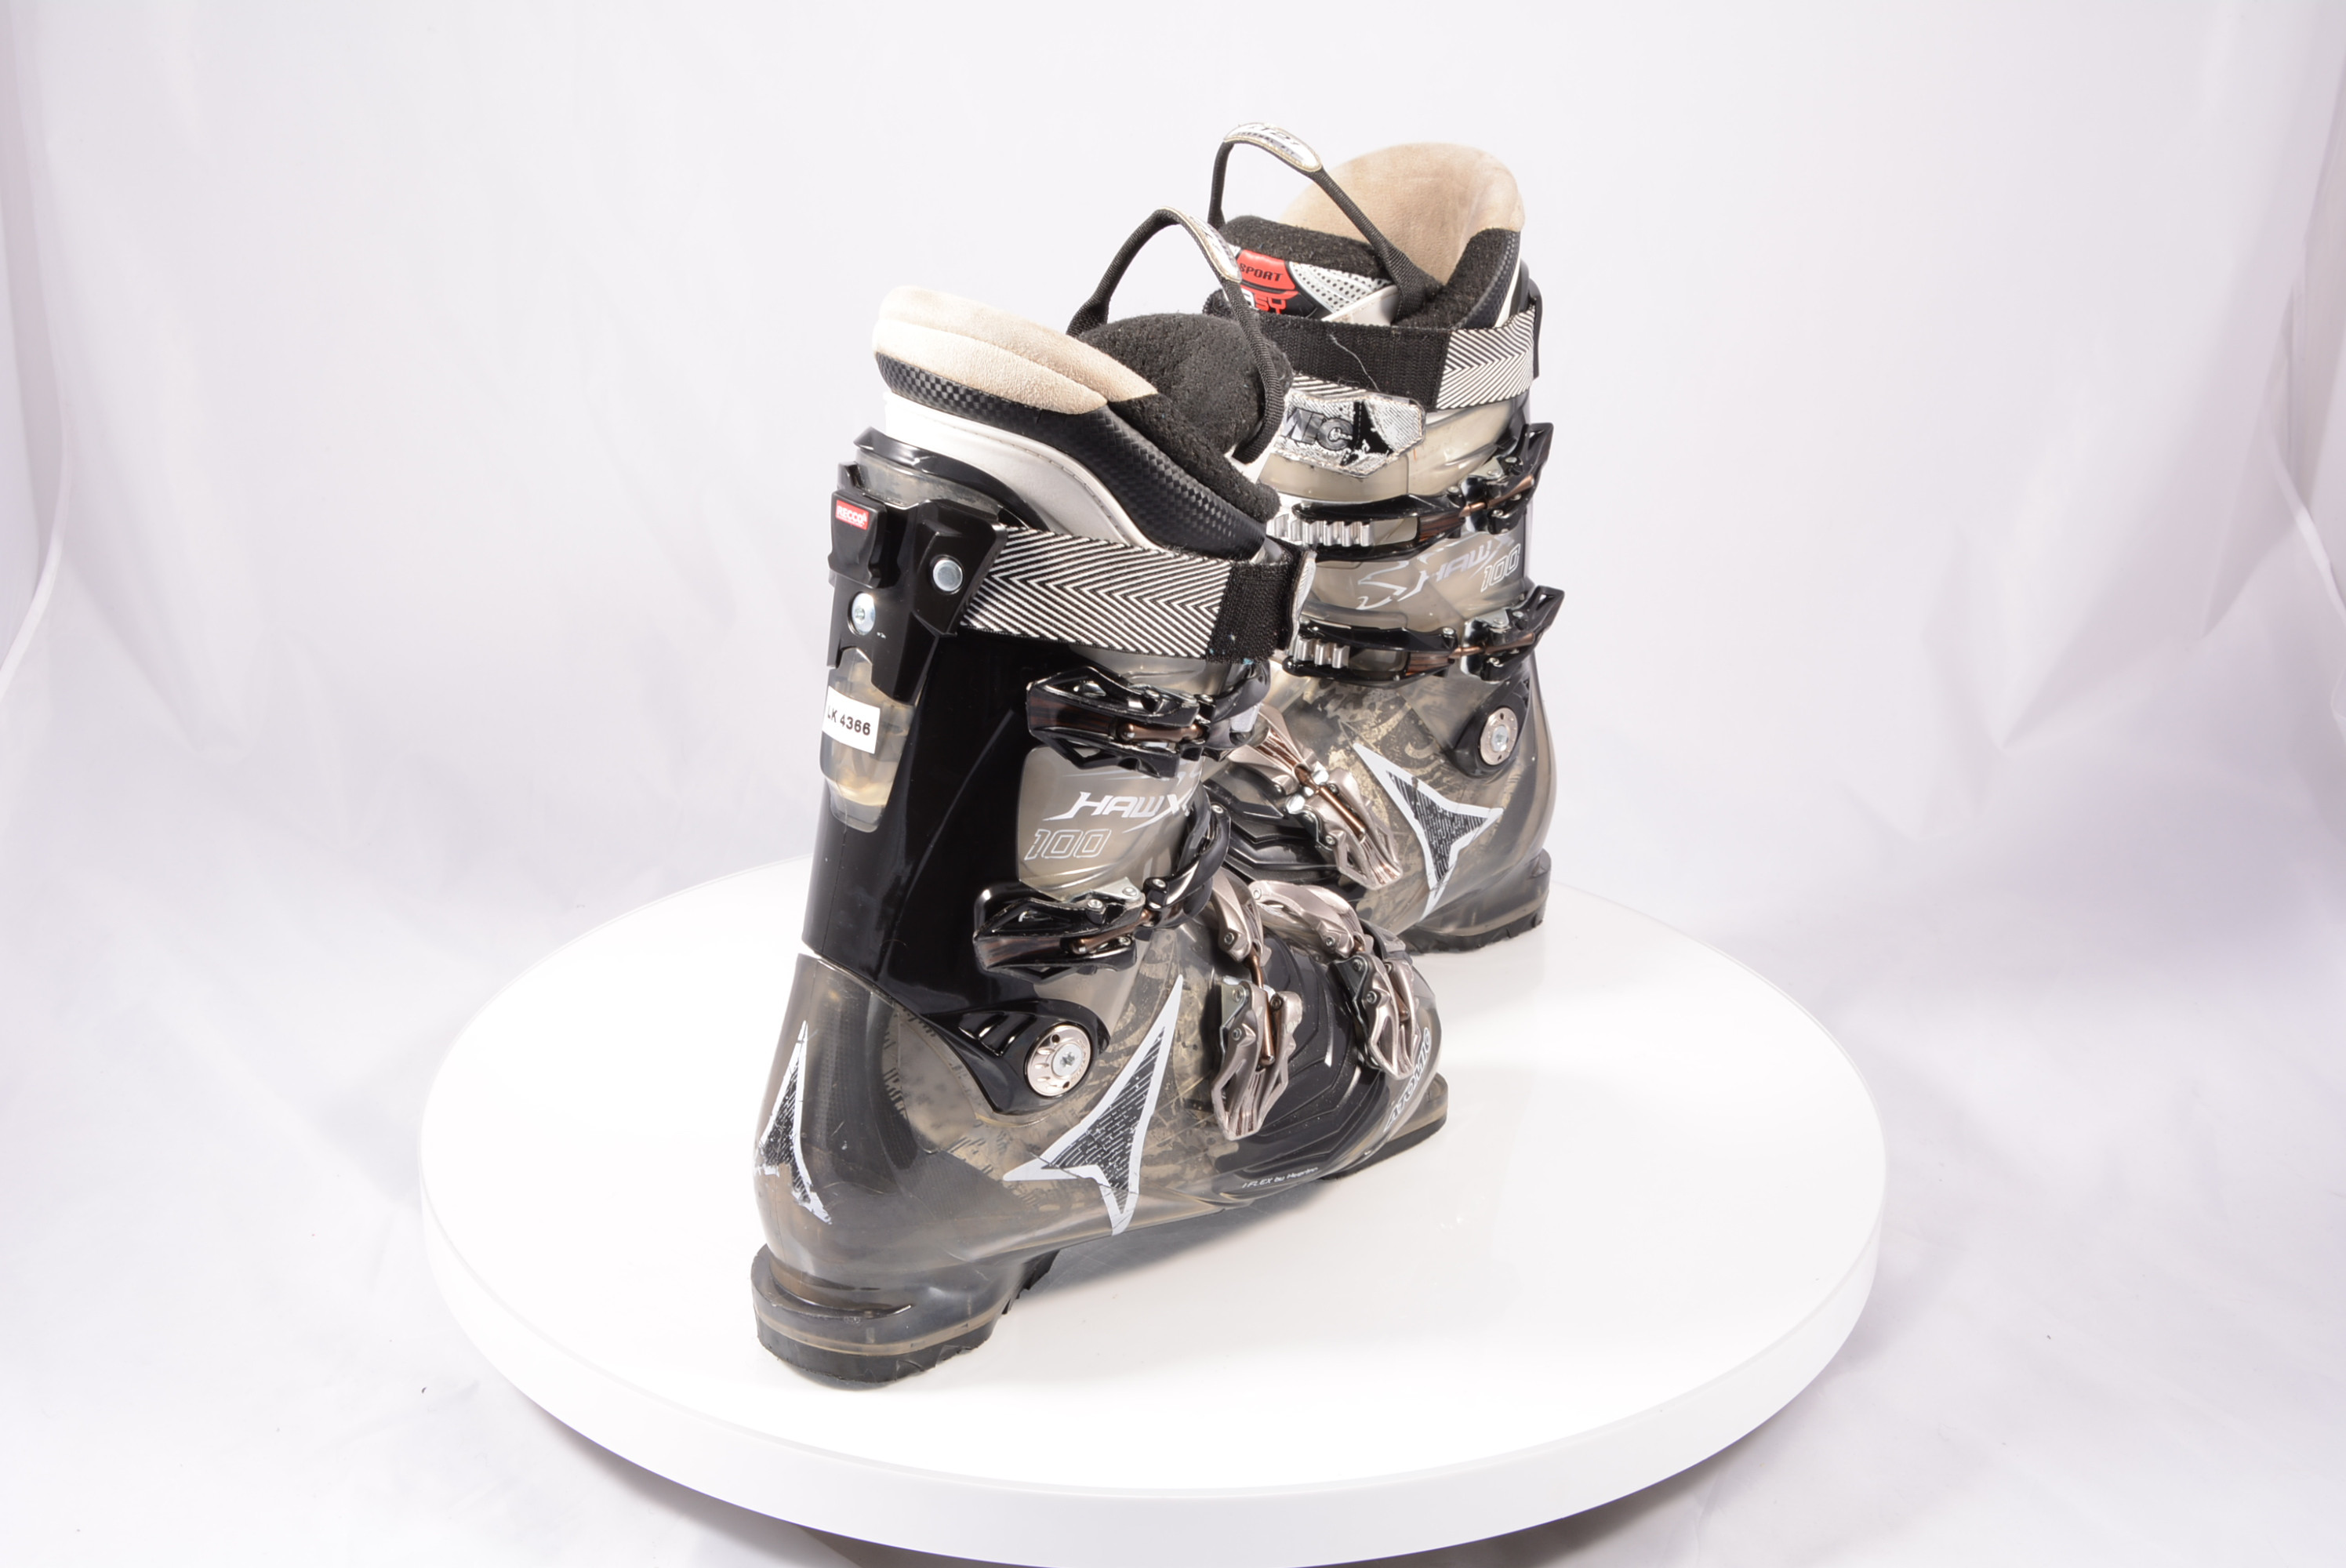 ski boots HAWX 100 GREY/trans, Thermal fit T2, Sport ASY, Anatomic Hi-perf fit, Canting, Recco, micro, - Mardosport.com